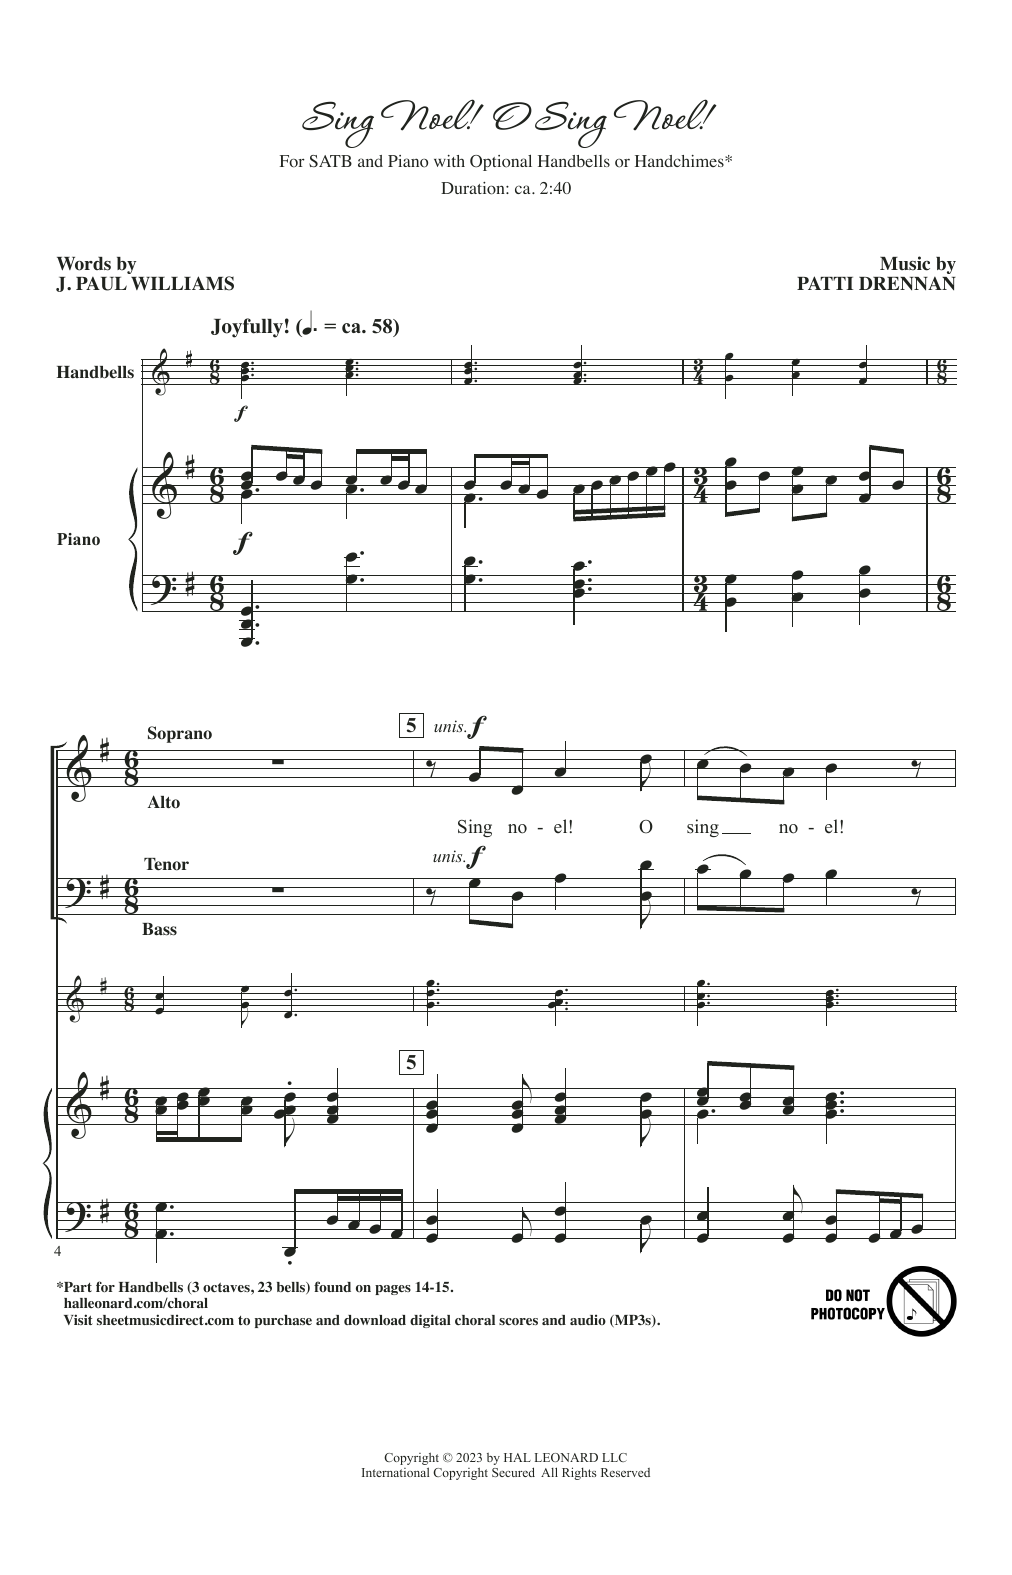 Patti Drennan Sing Noel! O Sing Noel! Sheet Music Notes & Chords for SATB Choir - Download or Print PDF